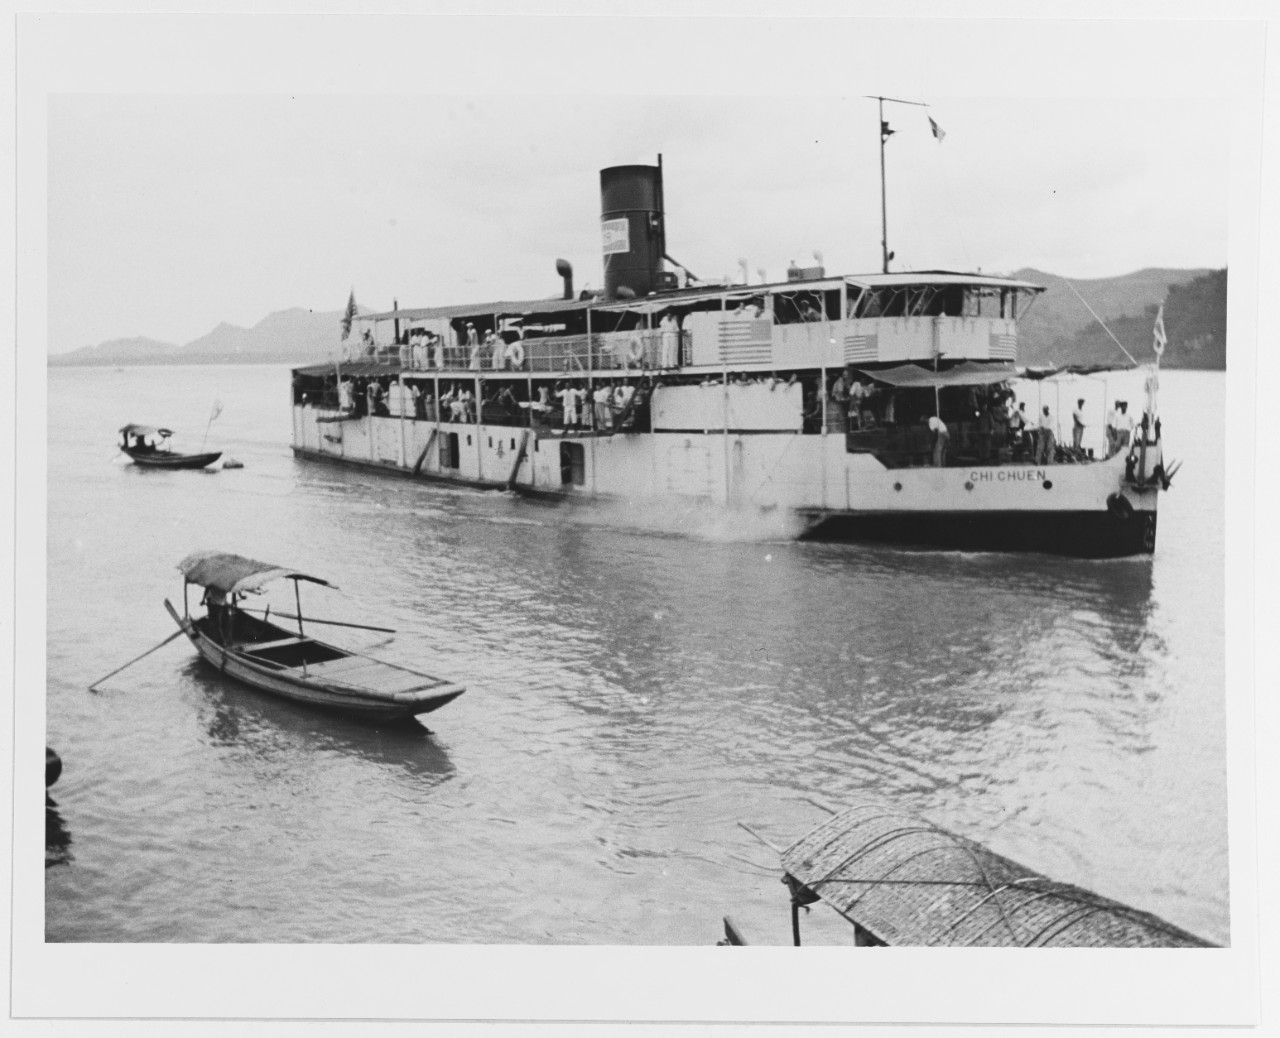 CHI CHUEN (Yangtze River steamer)